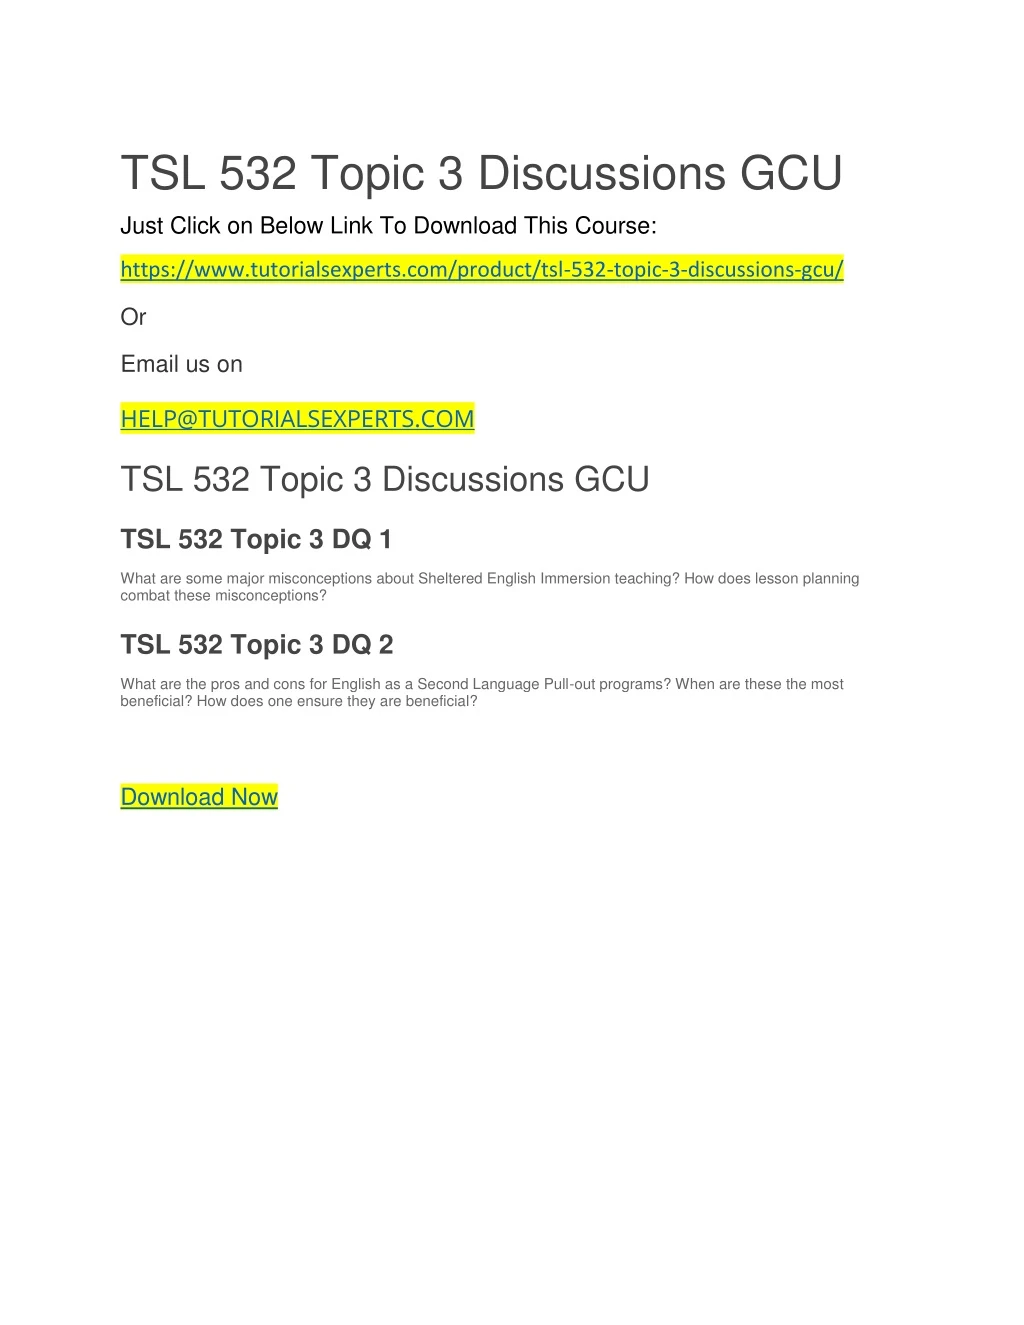 tsl 532 topic 3 discussions gcu just click